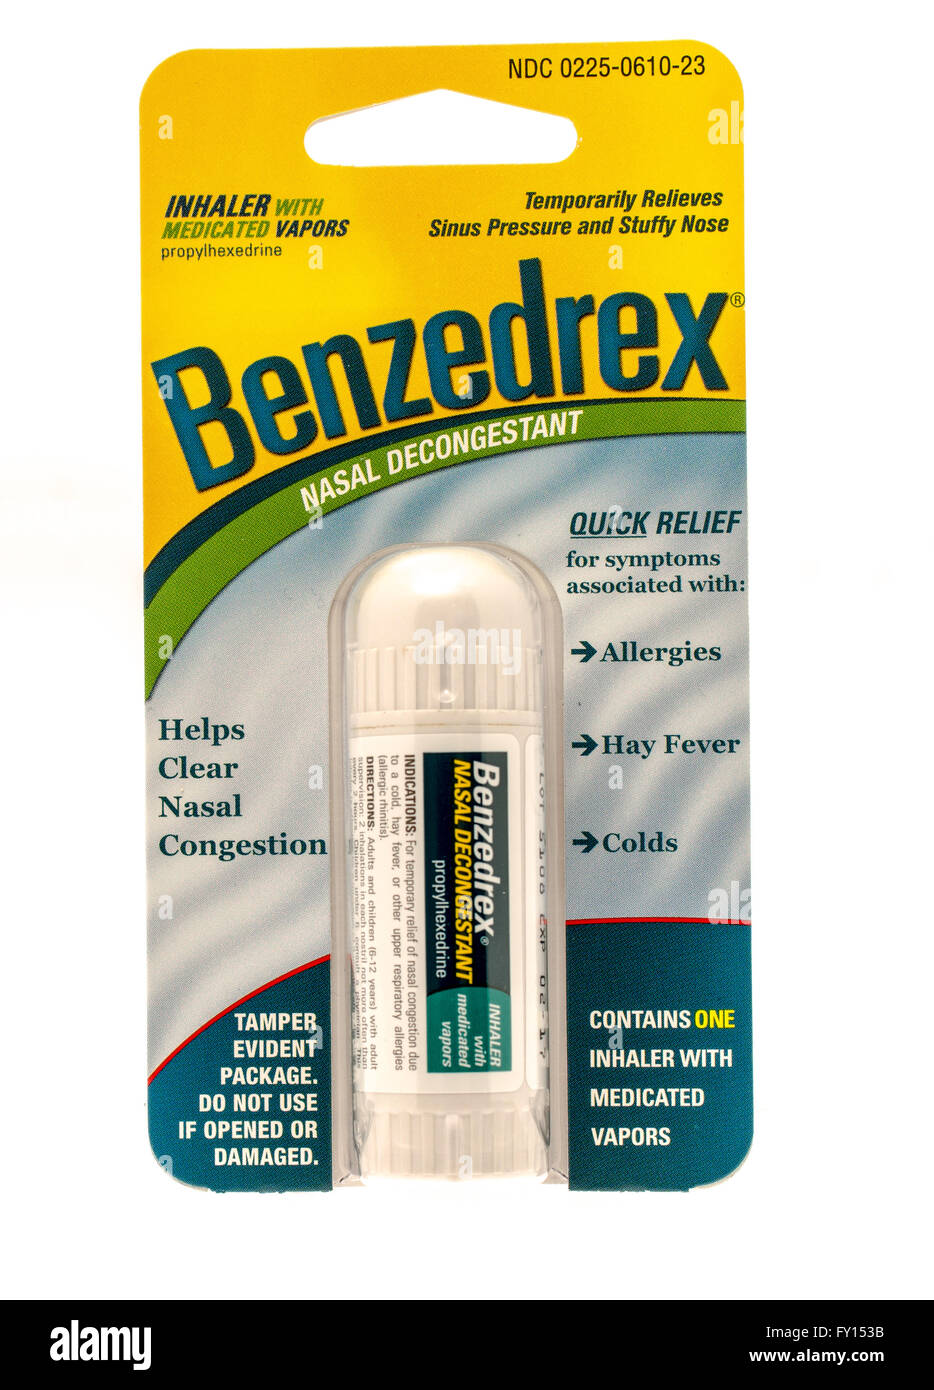 WI -1 Oct 2015: Package of Benzedrex nasal decongestant. 